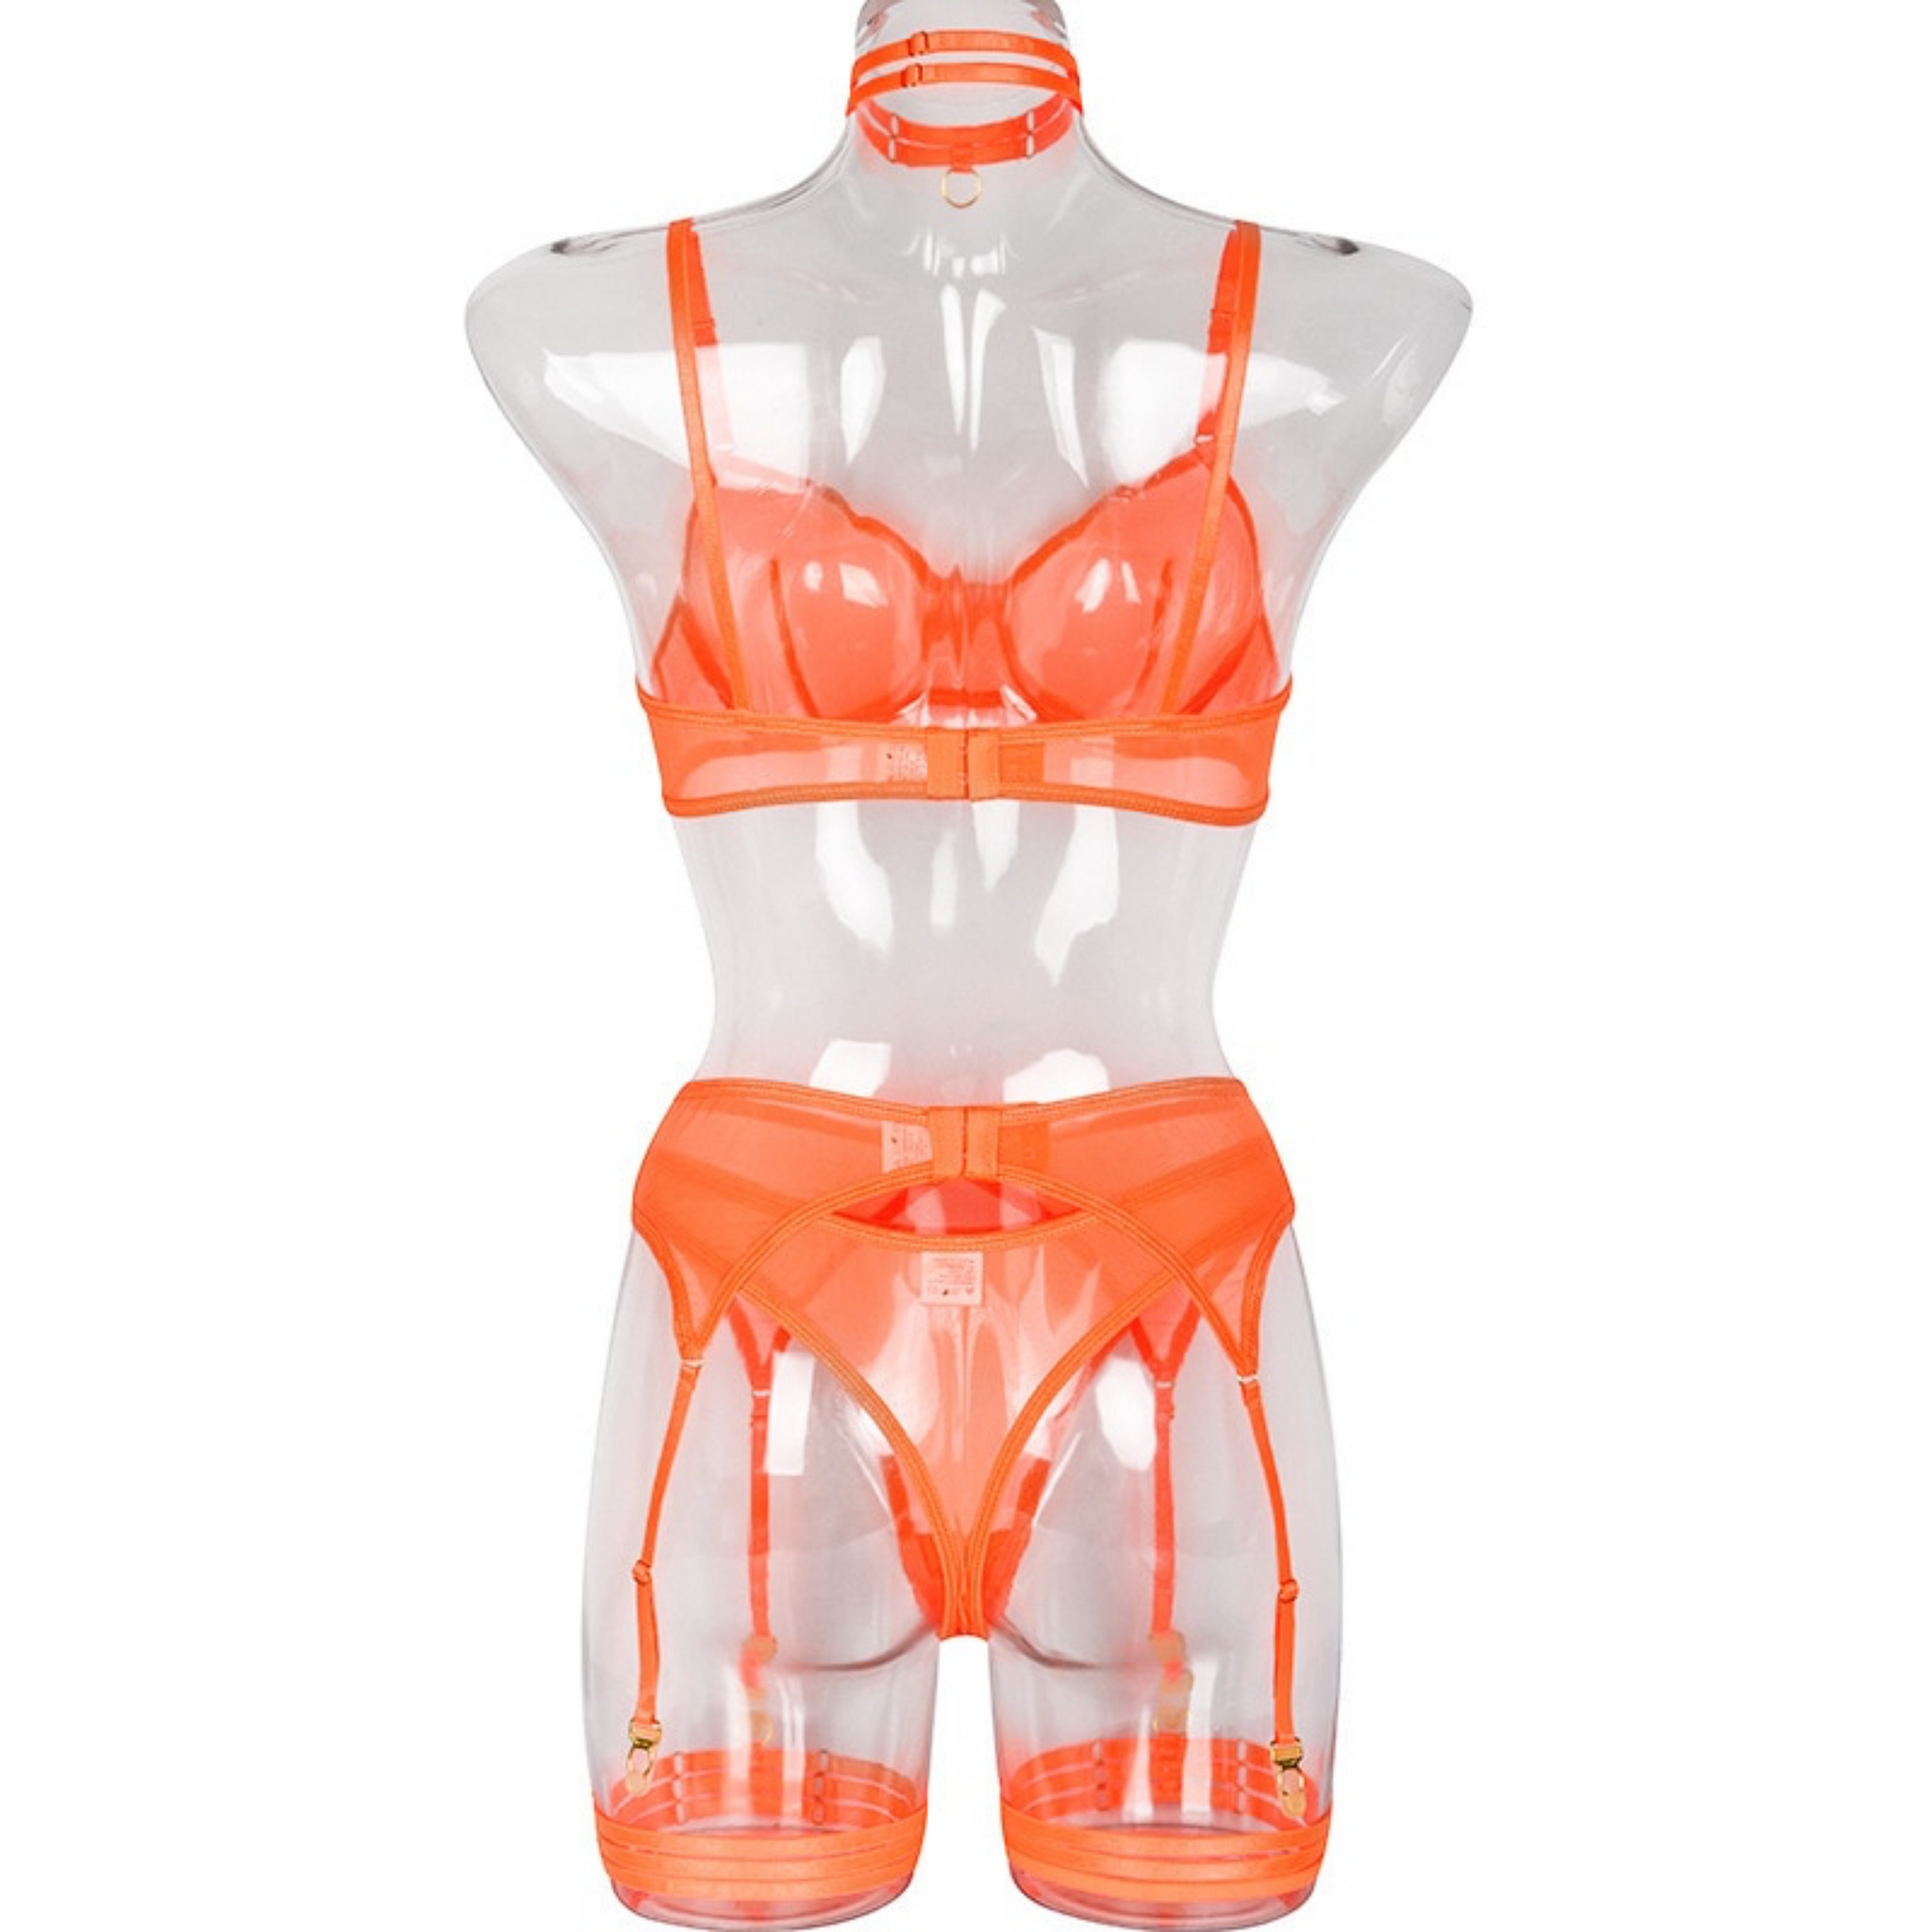 Binpure Women Mesh Lingerie Set, Solid Color Hollow Out Perspective  Underwear Combo